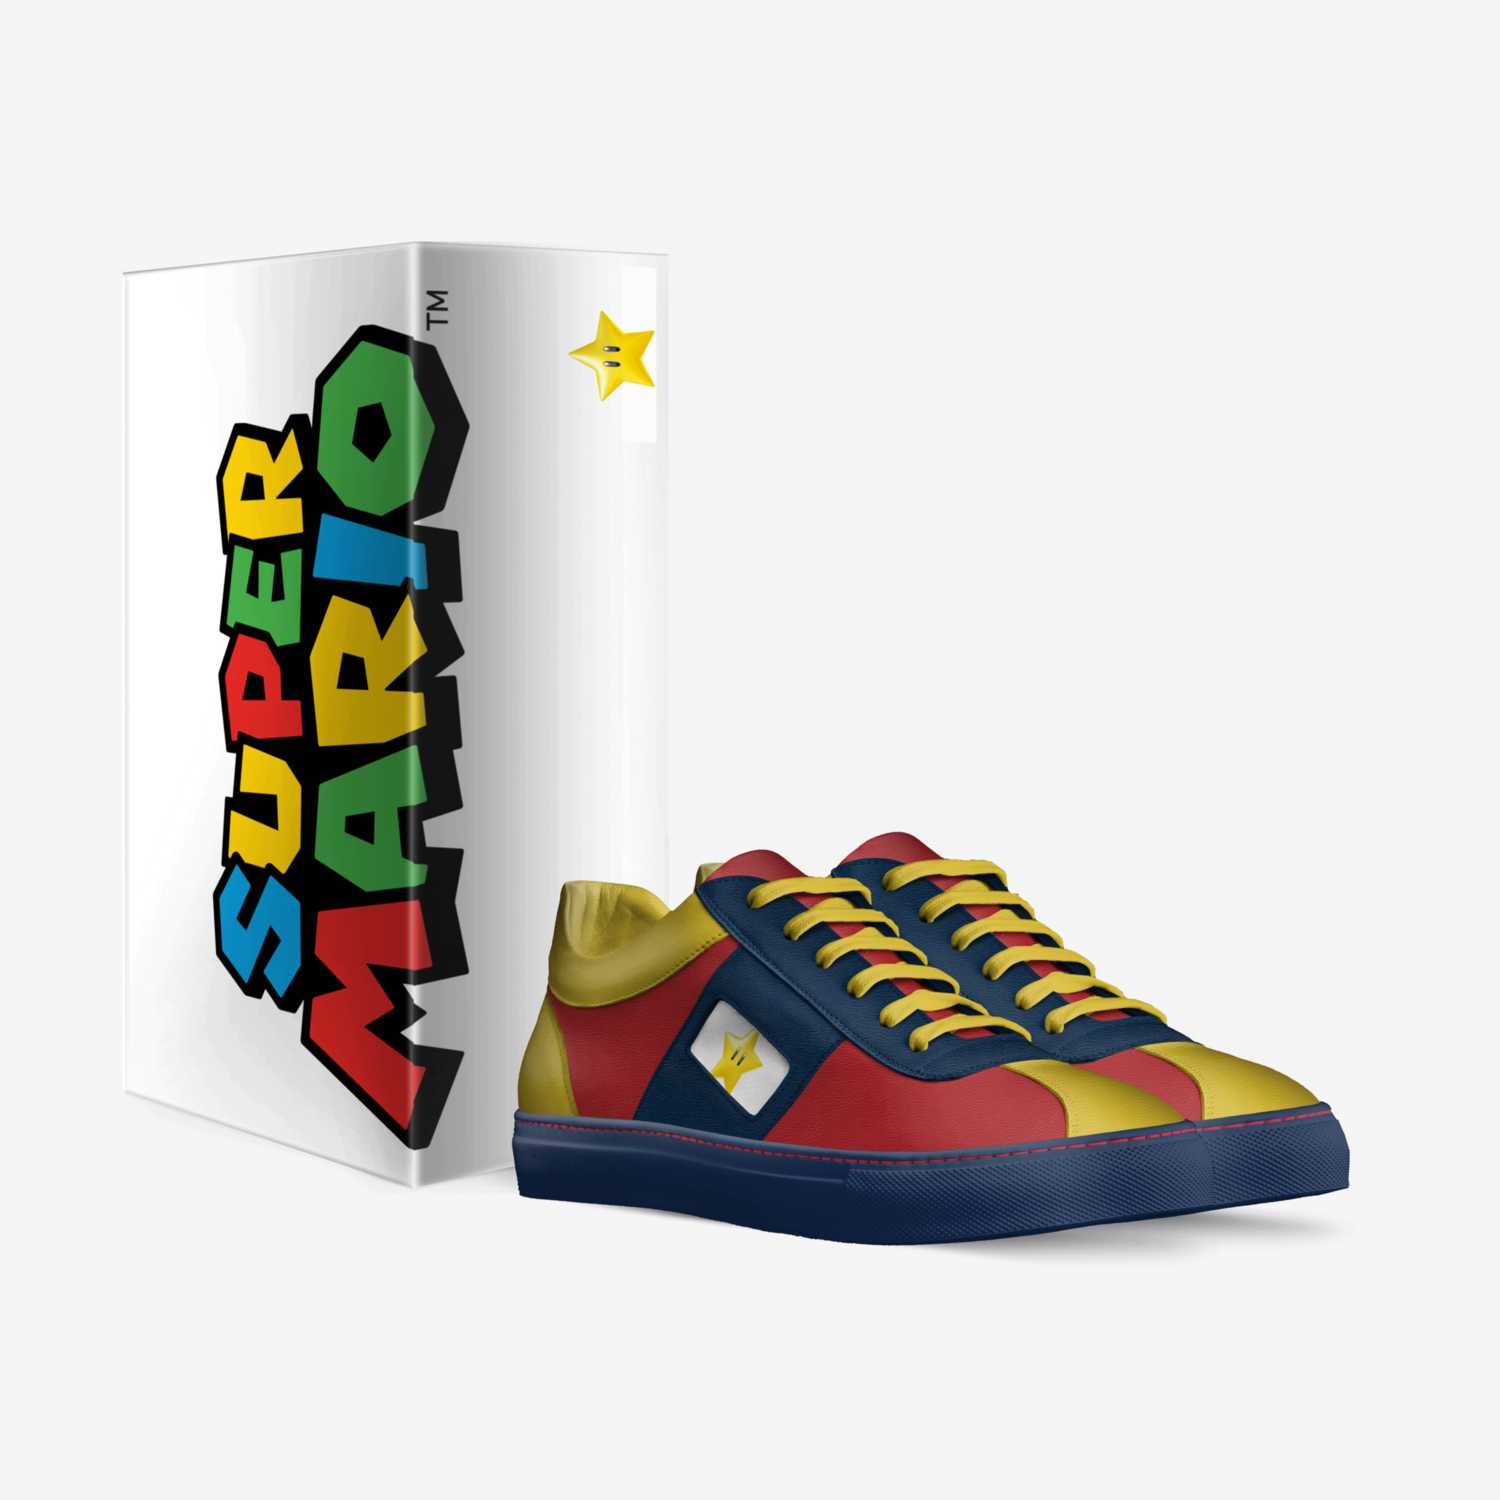 Super Mario custom made in Italy shoes by Sam Shapiro | Box view